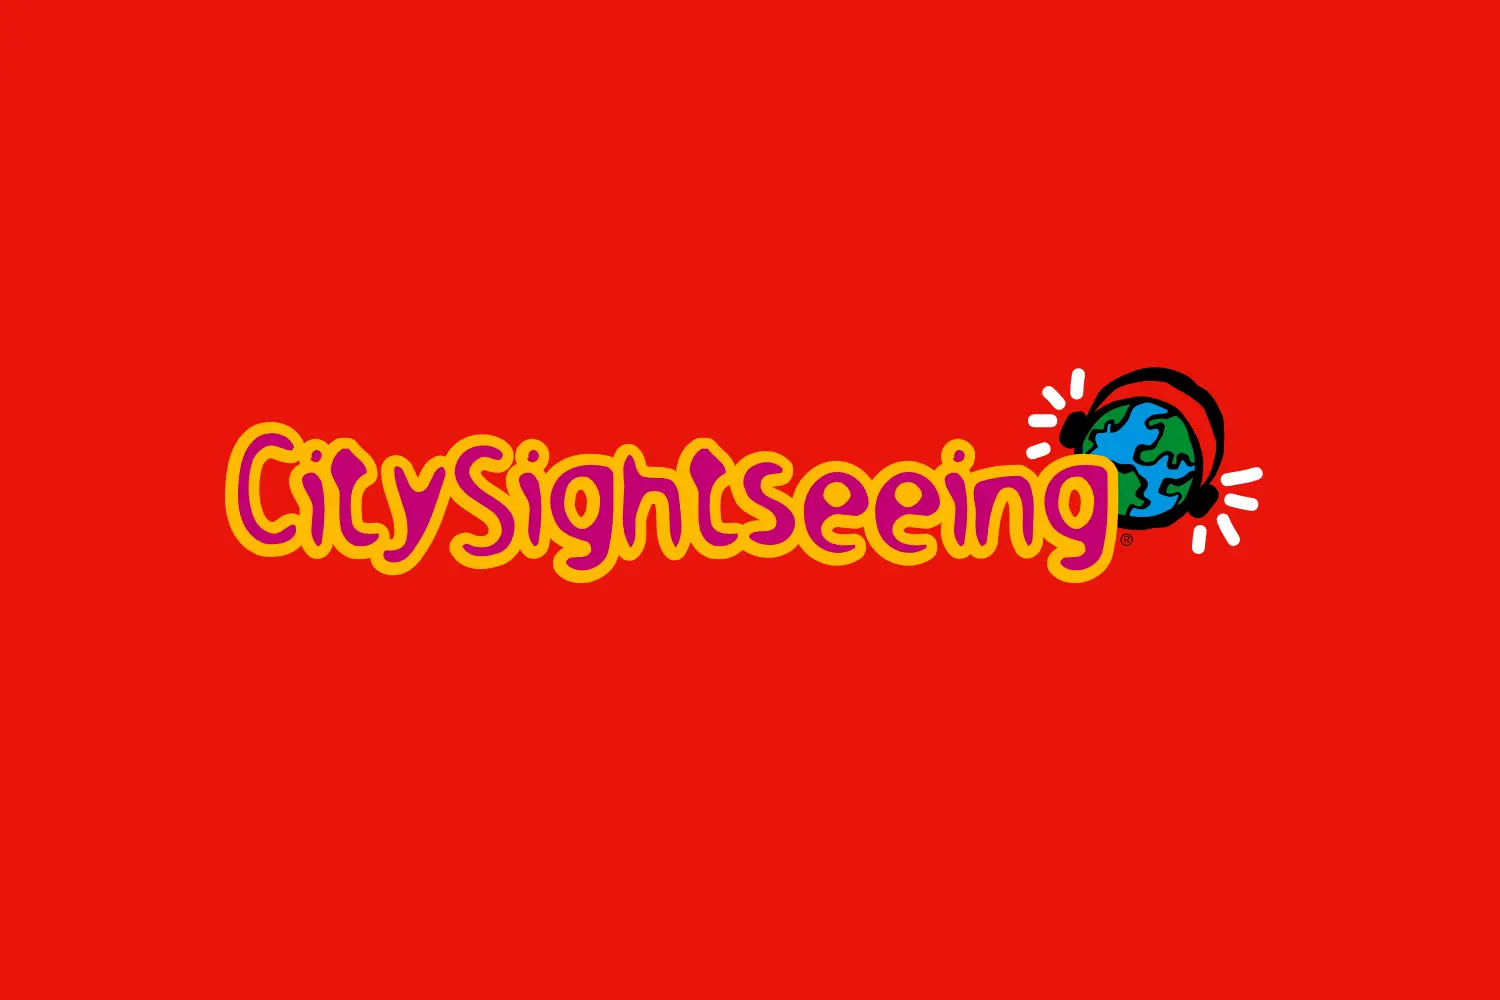 City Sightseeing Logo Banner